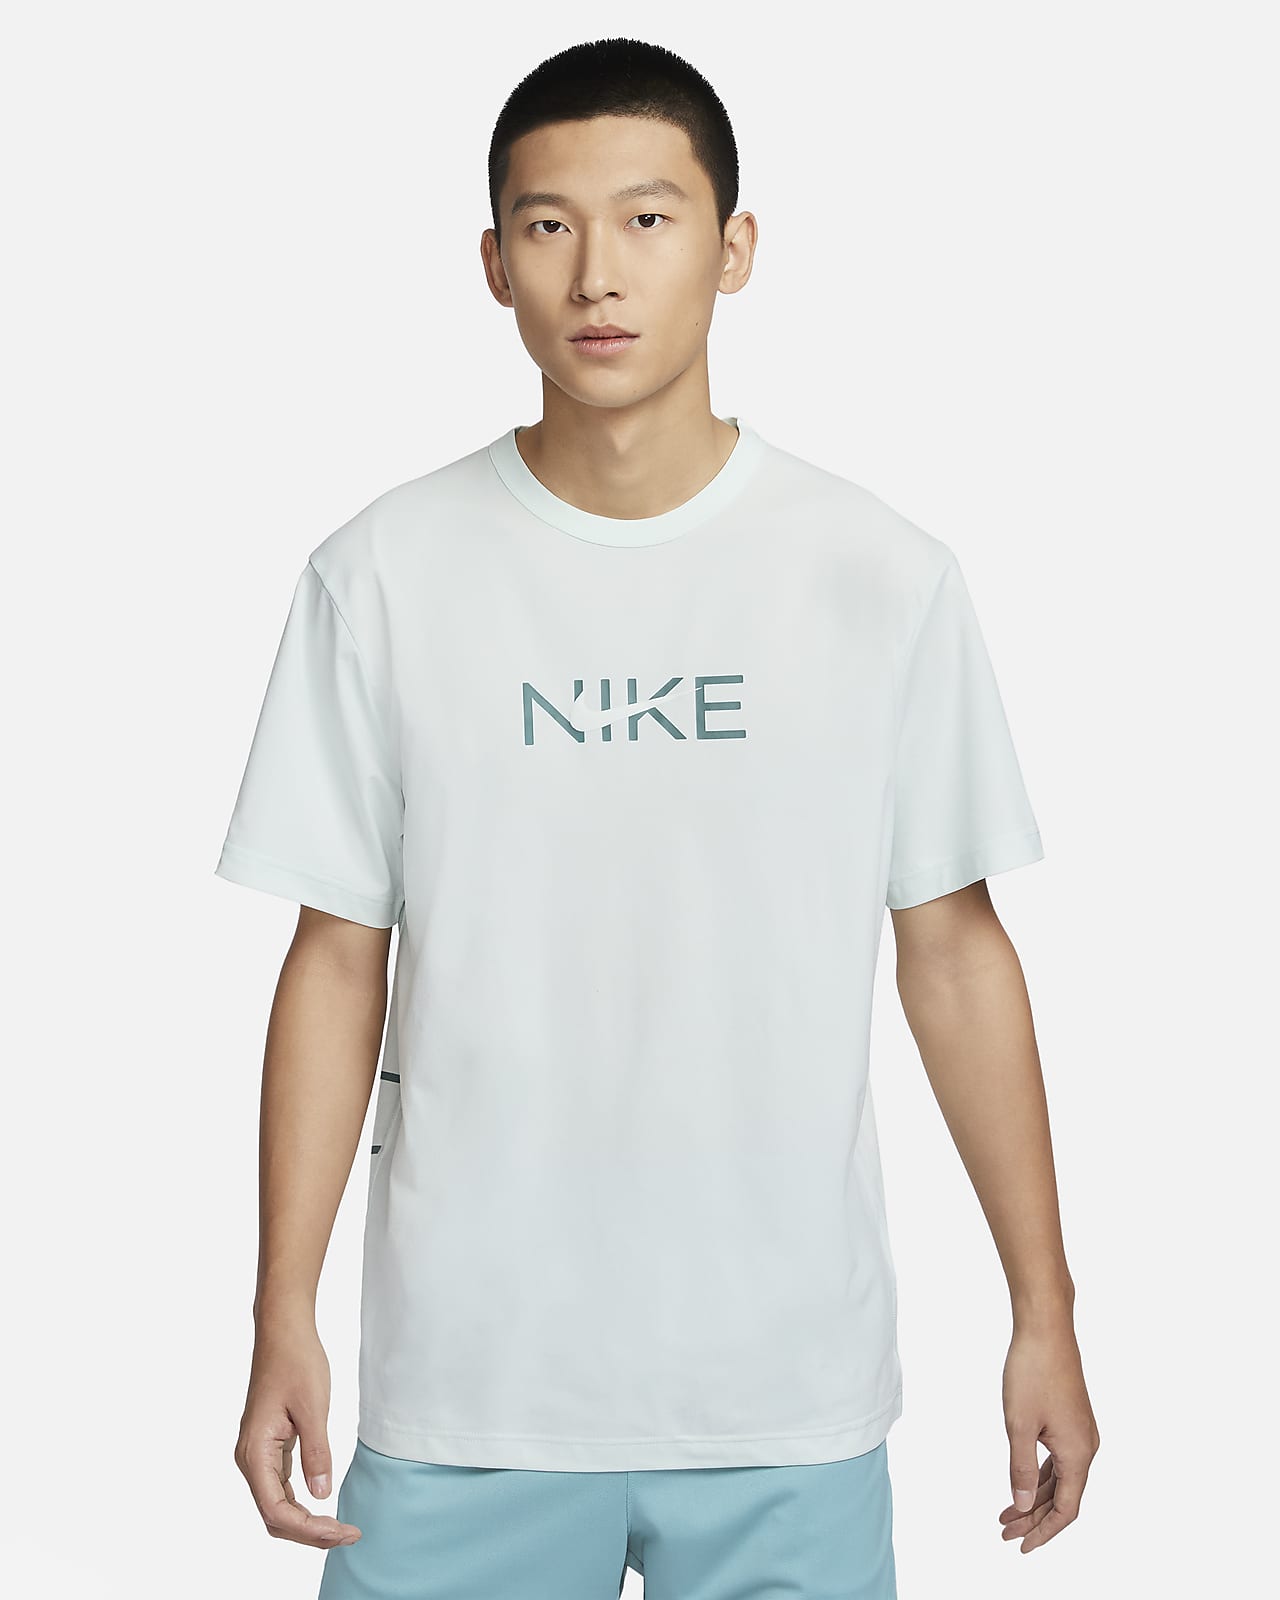 Nike Hyverse Men's Dri-FIT UV Protection Short-Sleeve Fitness Top